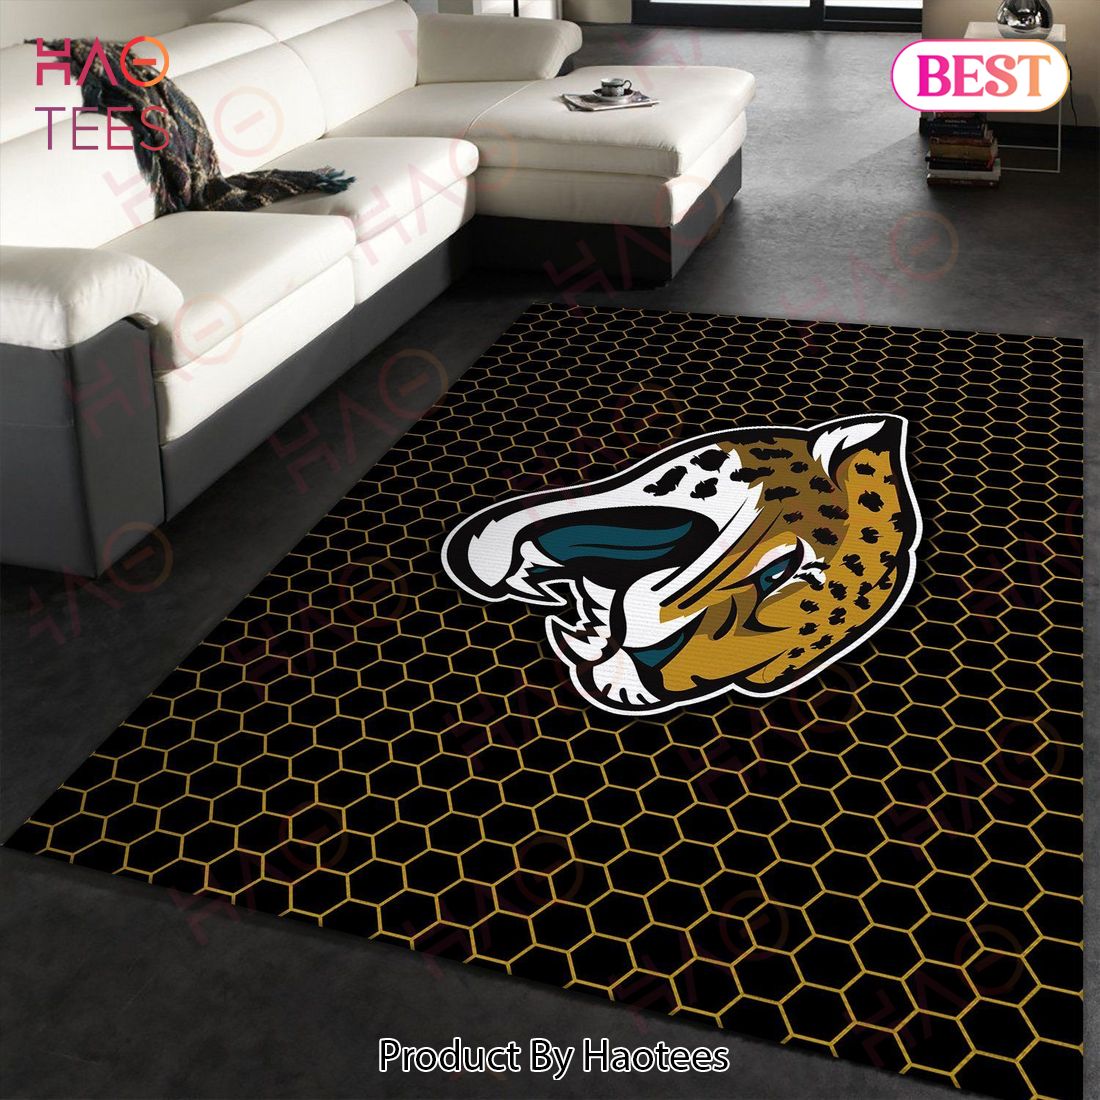 Jacksonville Jaguars NFL Area Rugs Carpet Mat Kitchen Rugs Floor Decor